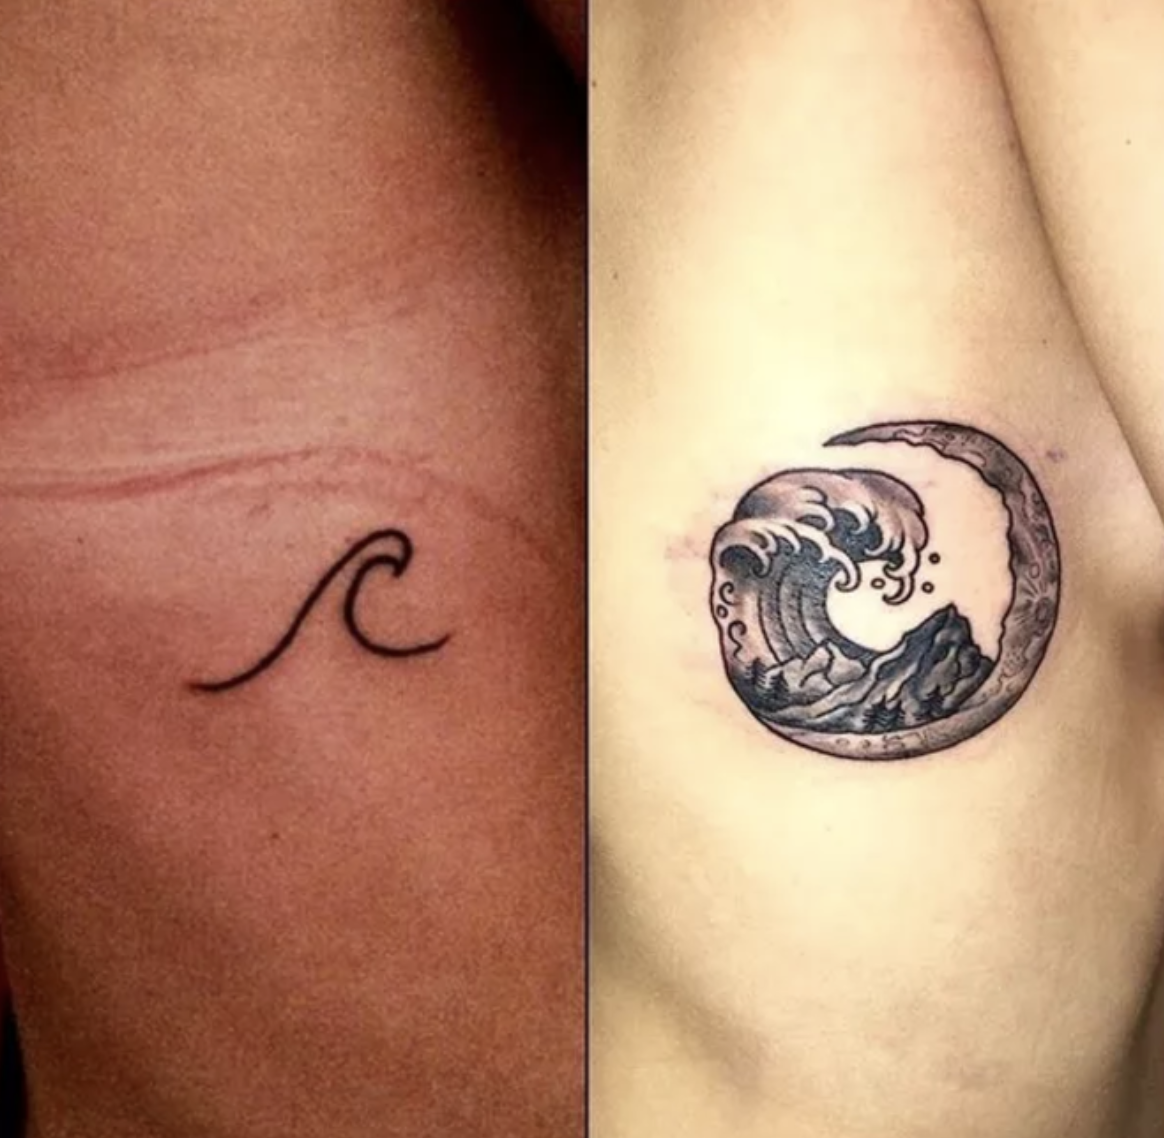 A tiny crooked wave tattoo and a bigger wave tatoo